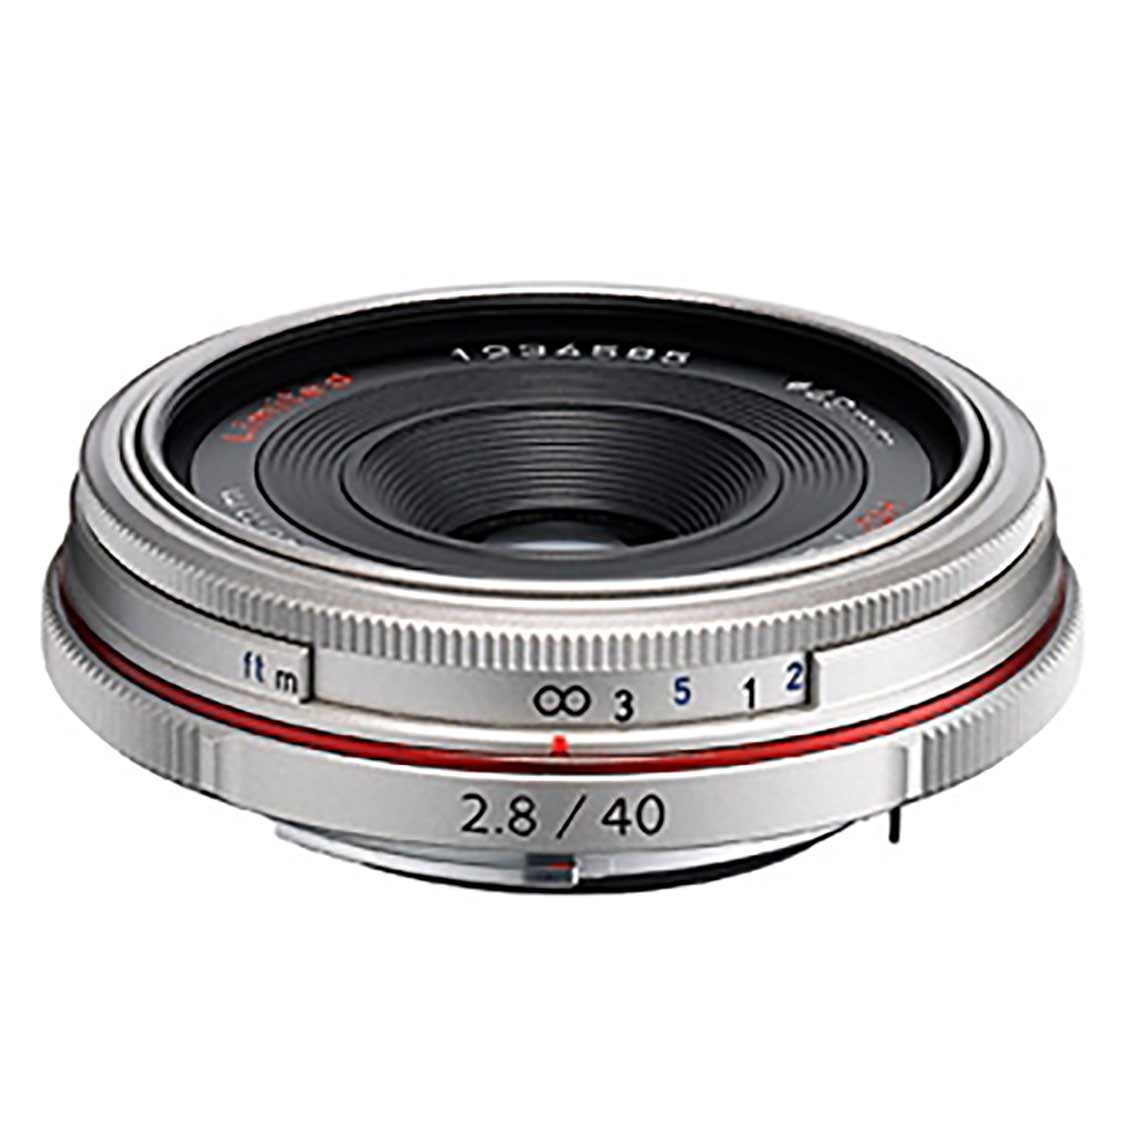 Pentax DA 40mm F2.8 HD Limited Lens (silver)